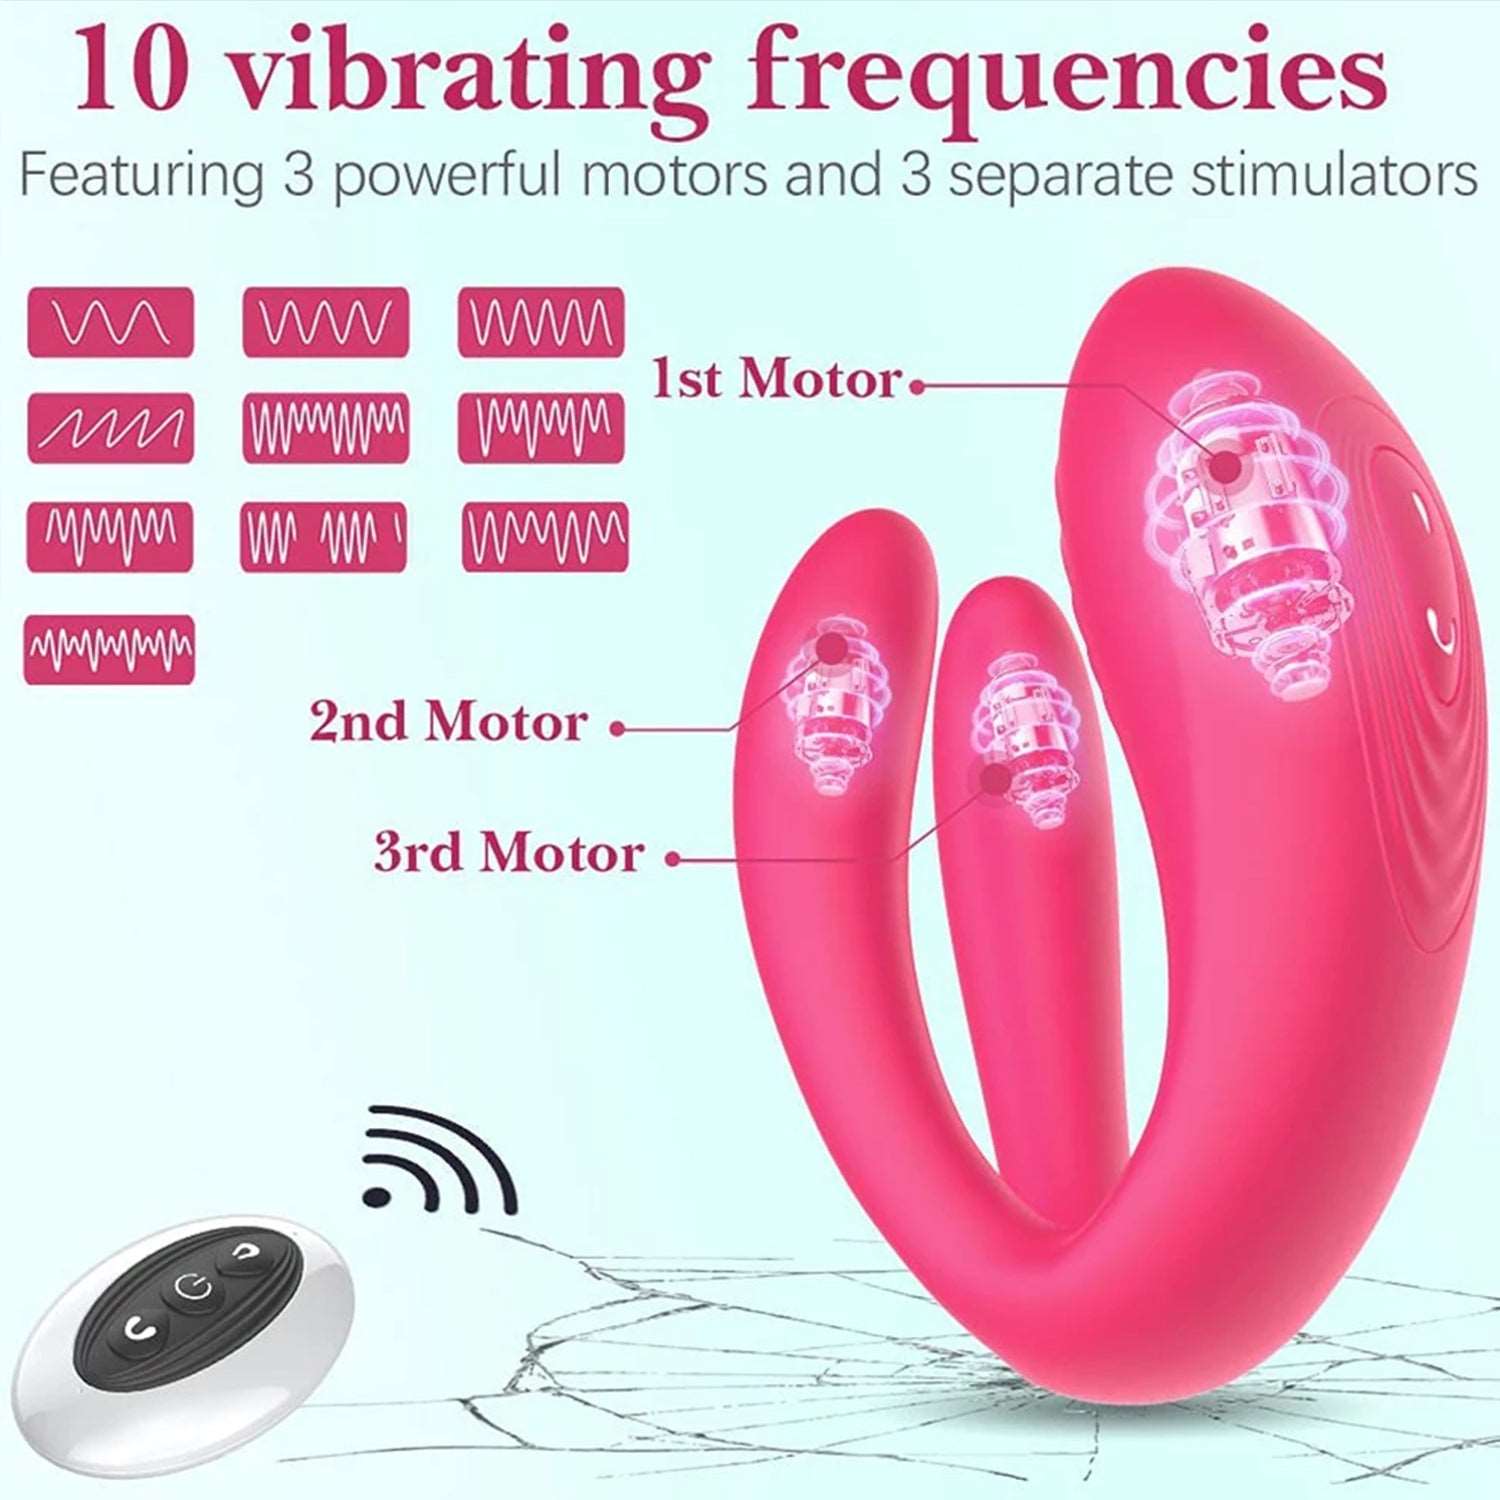 Couple vibrators